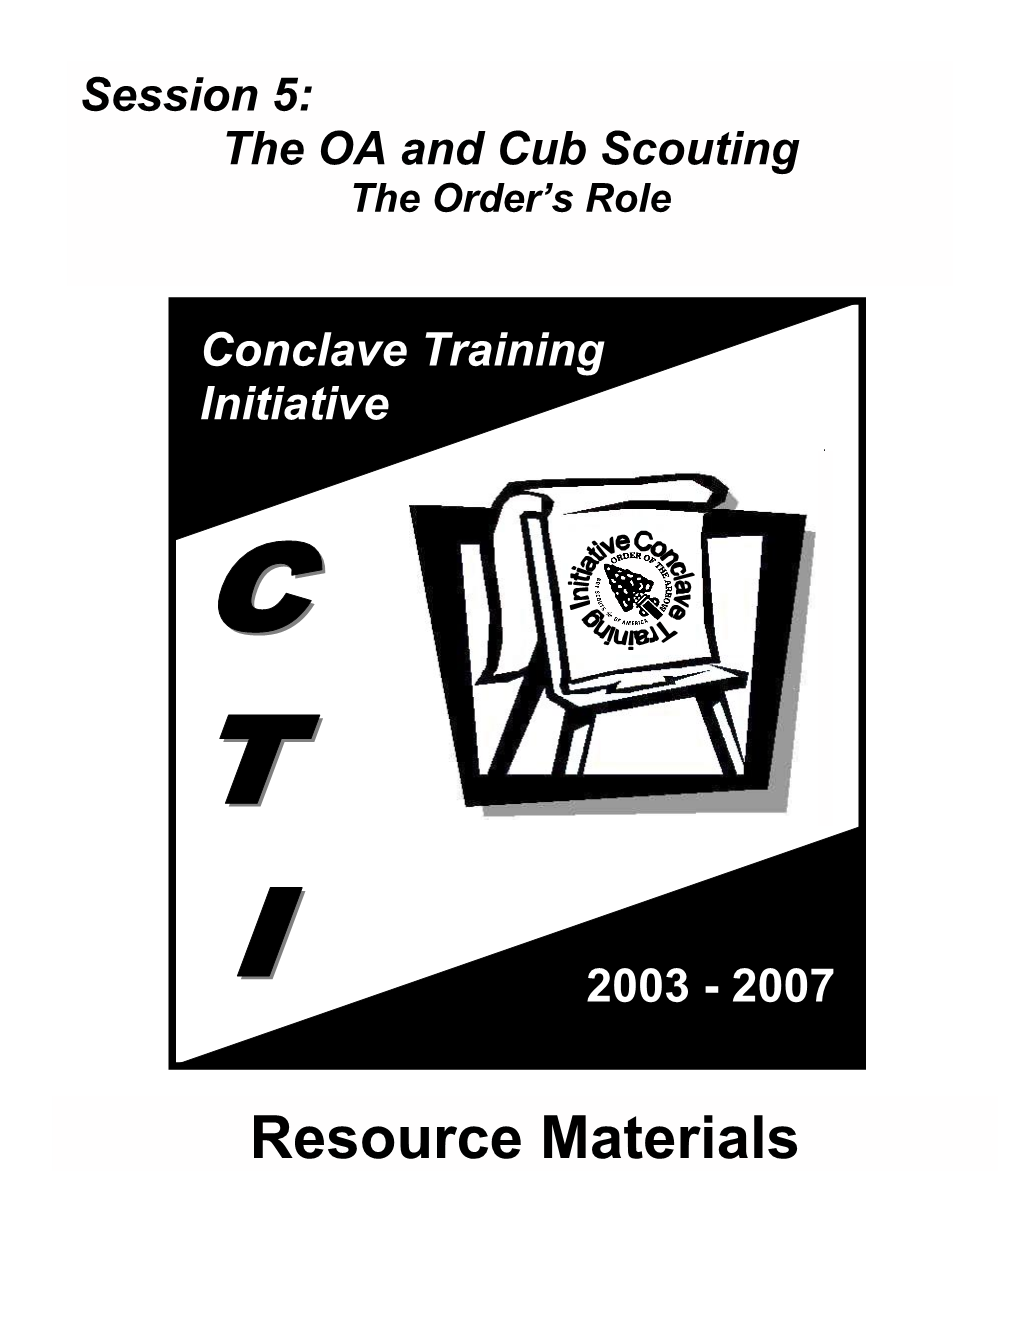 Resource Materials